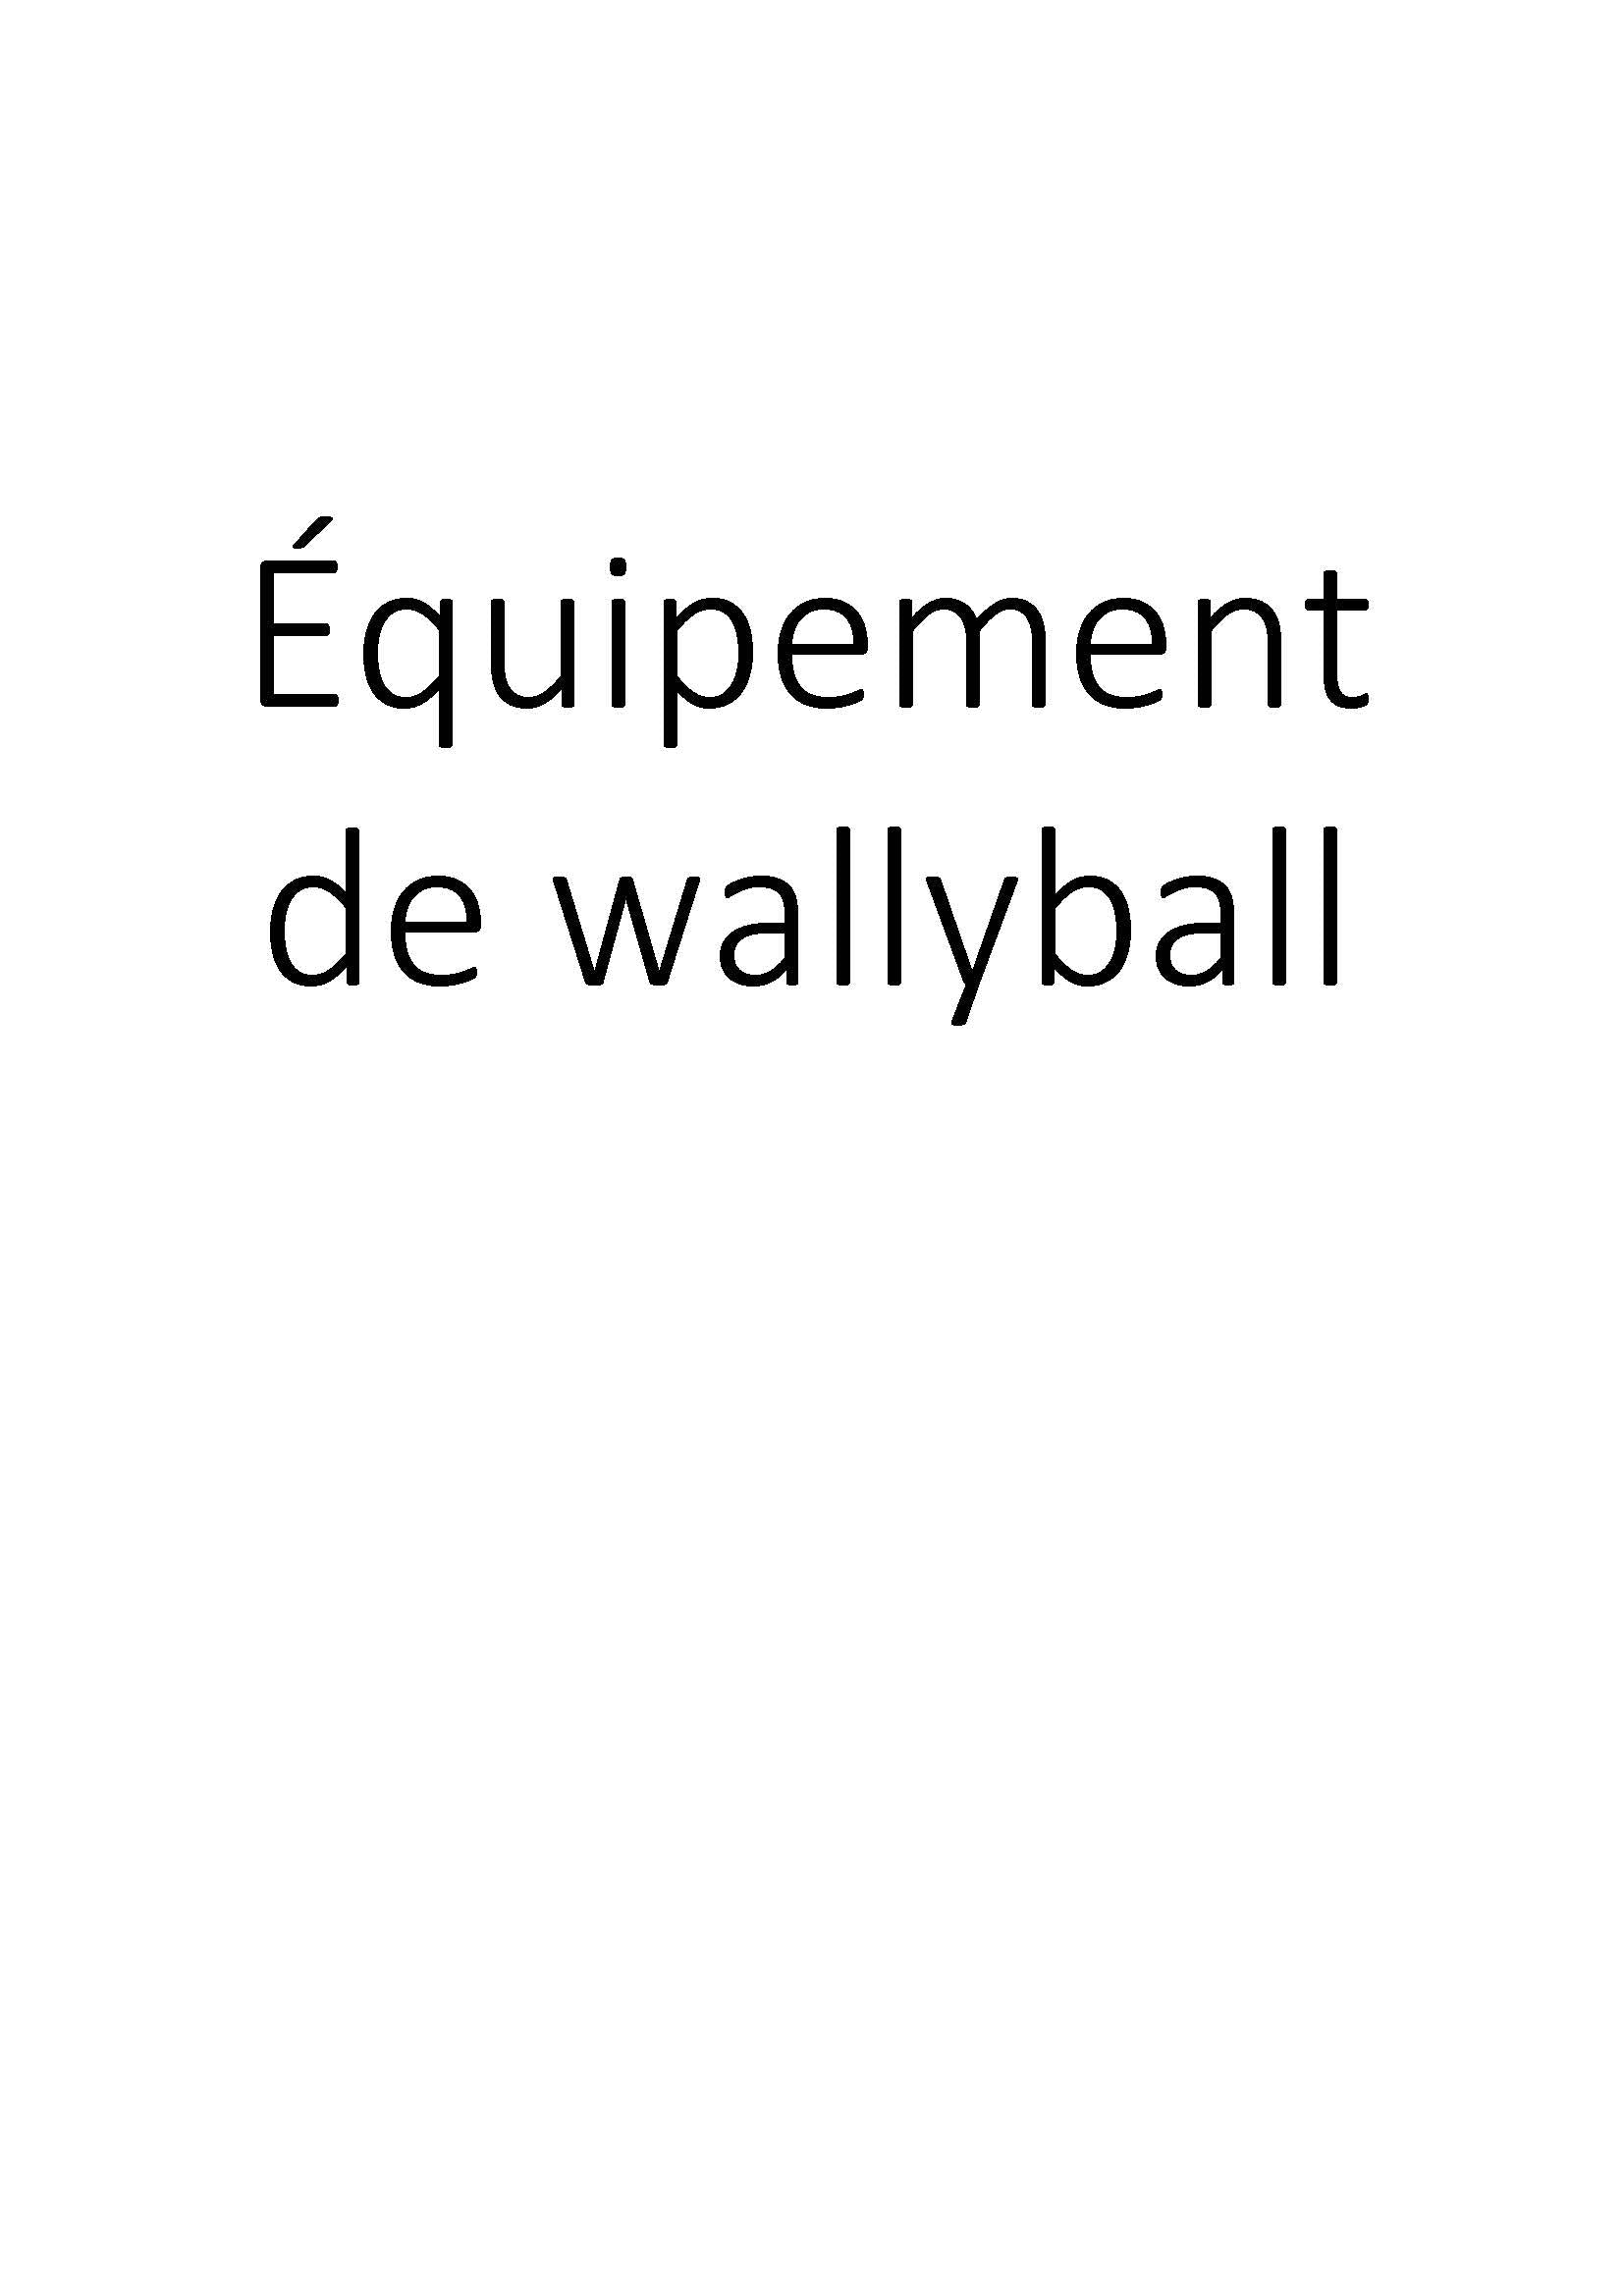 Équipement de wallyball clicktofournisseur.com